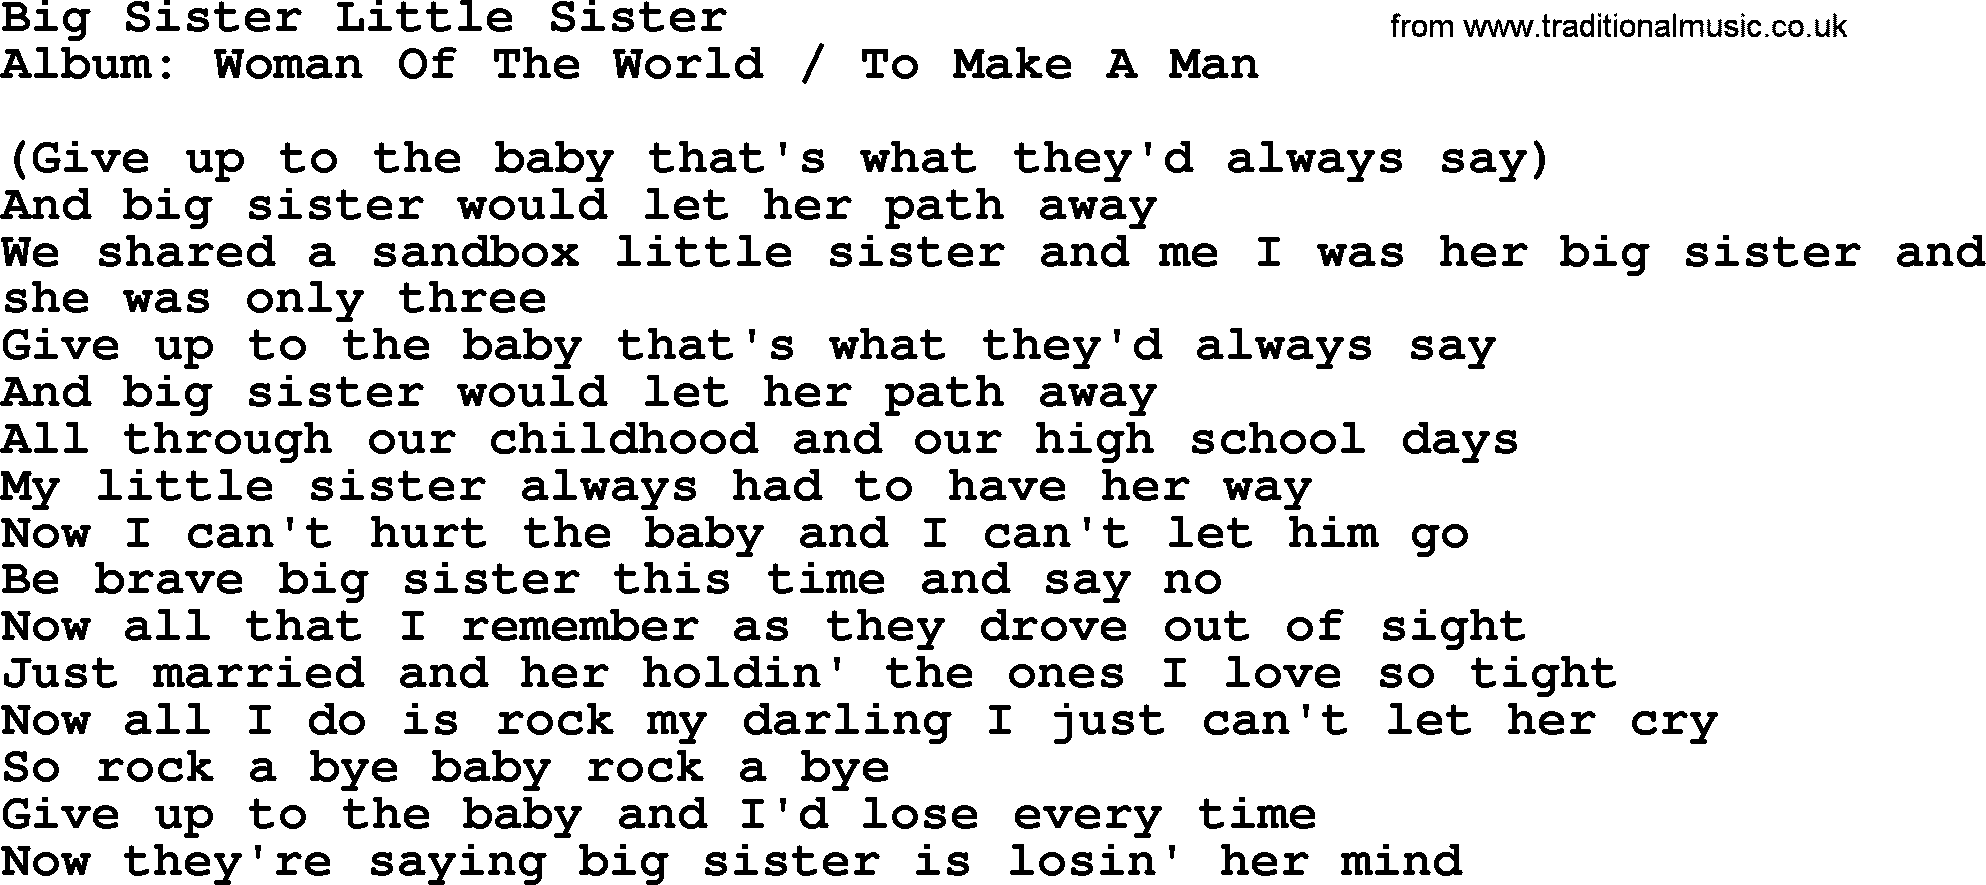 Loretta Lynn song: Big Sister Little Sister lyrics